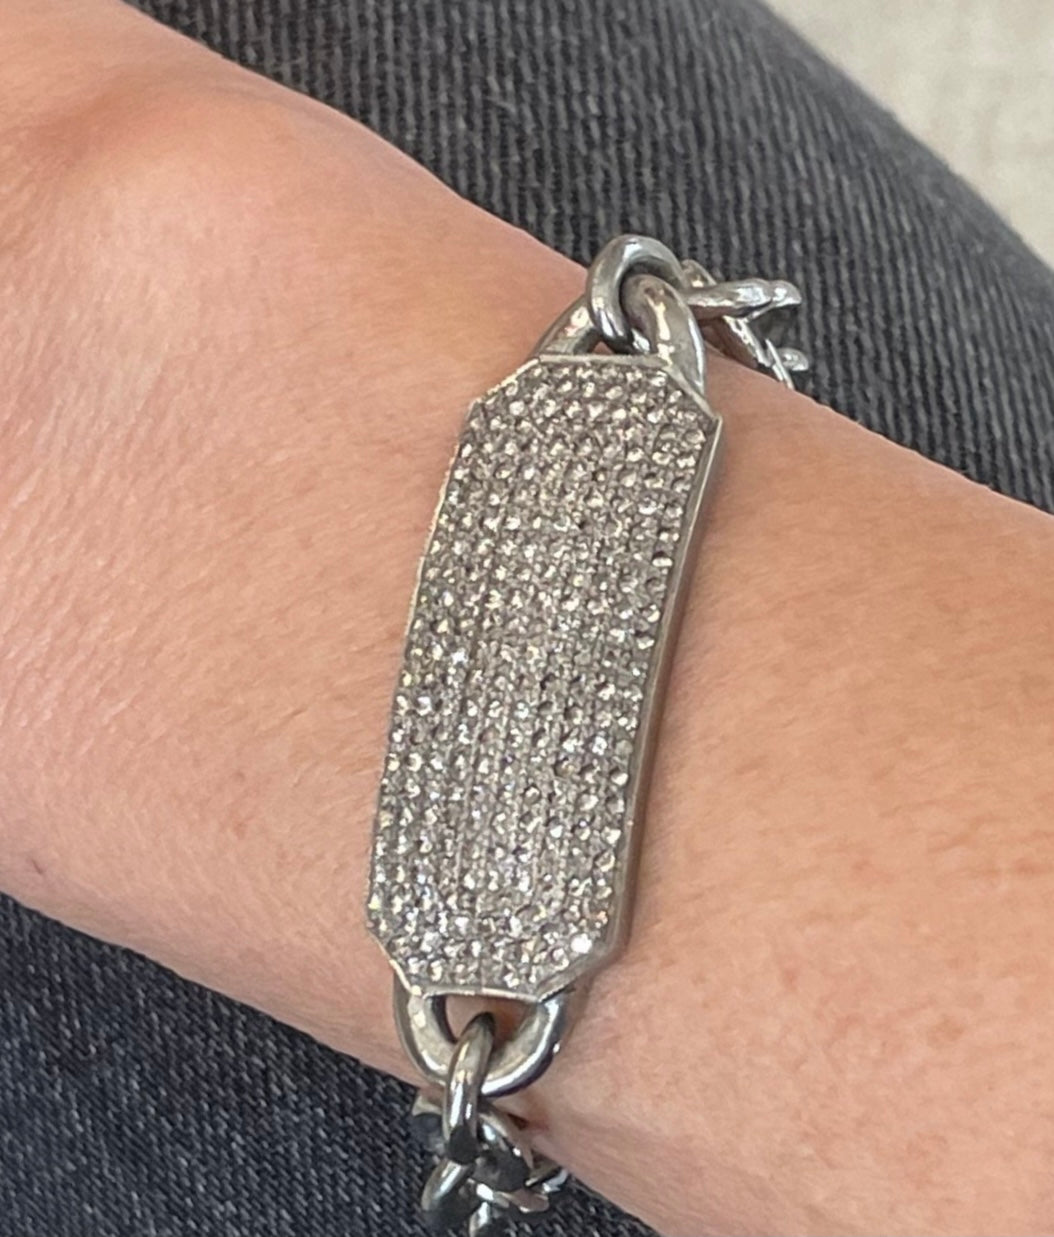 Diamond dog tag bracelet set in sterling silver